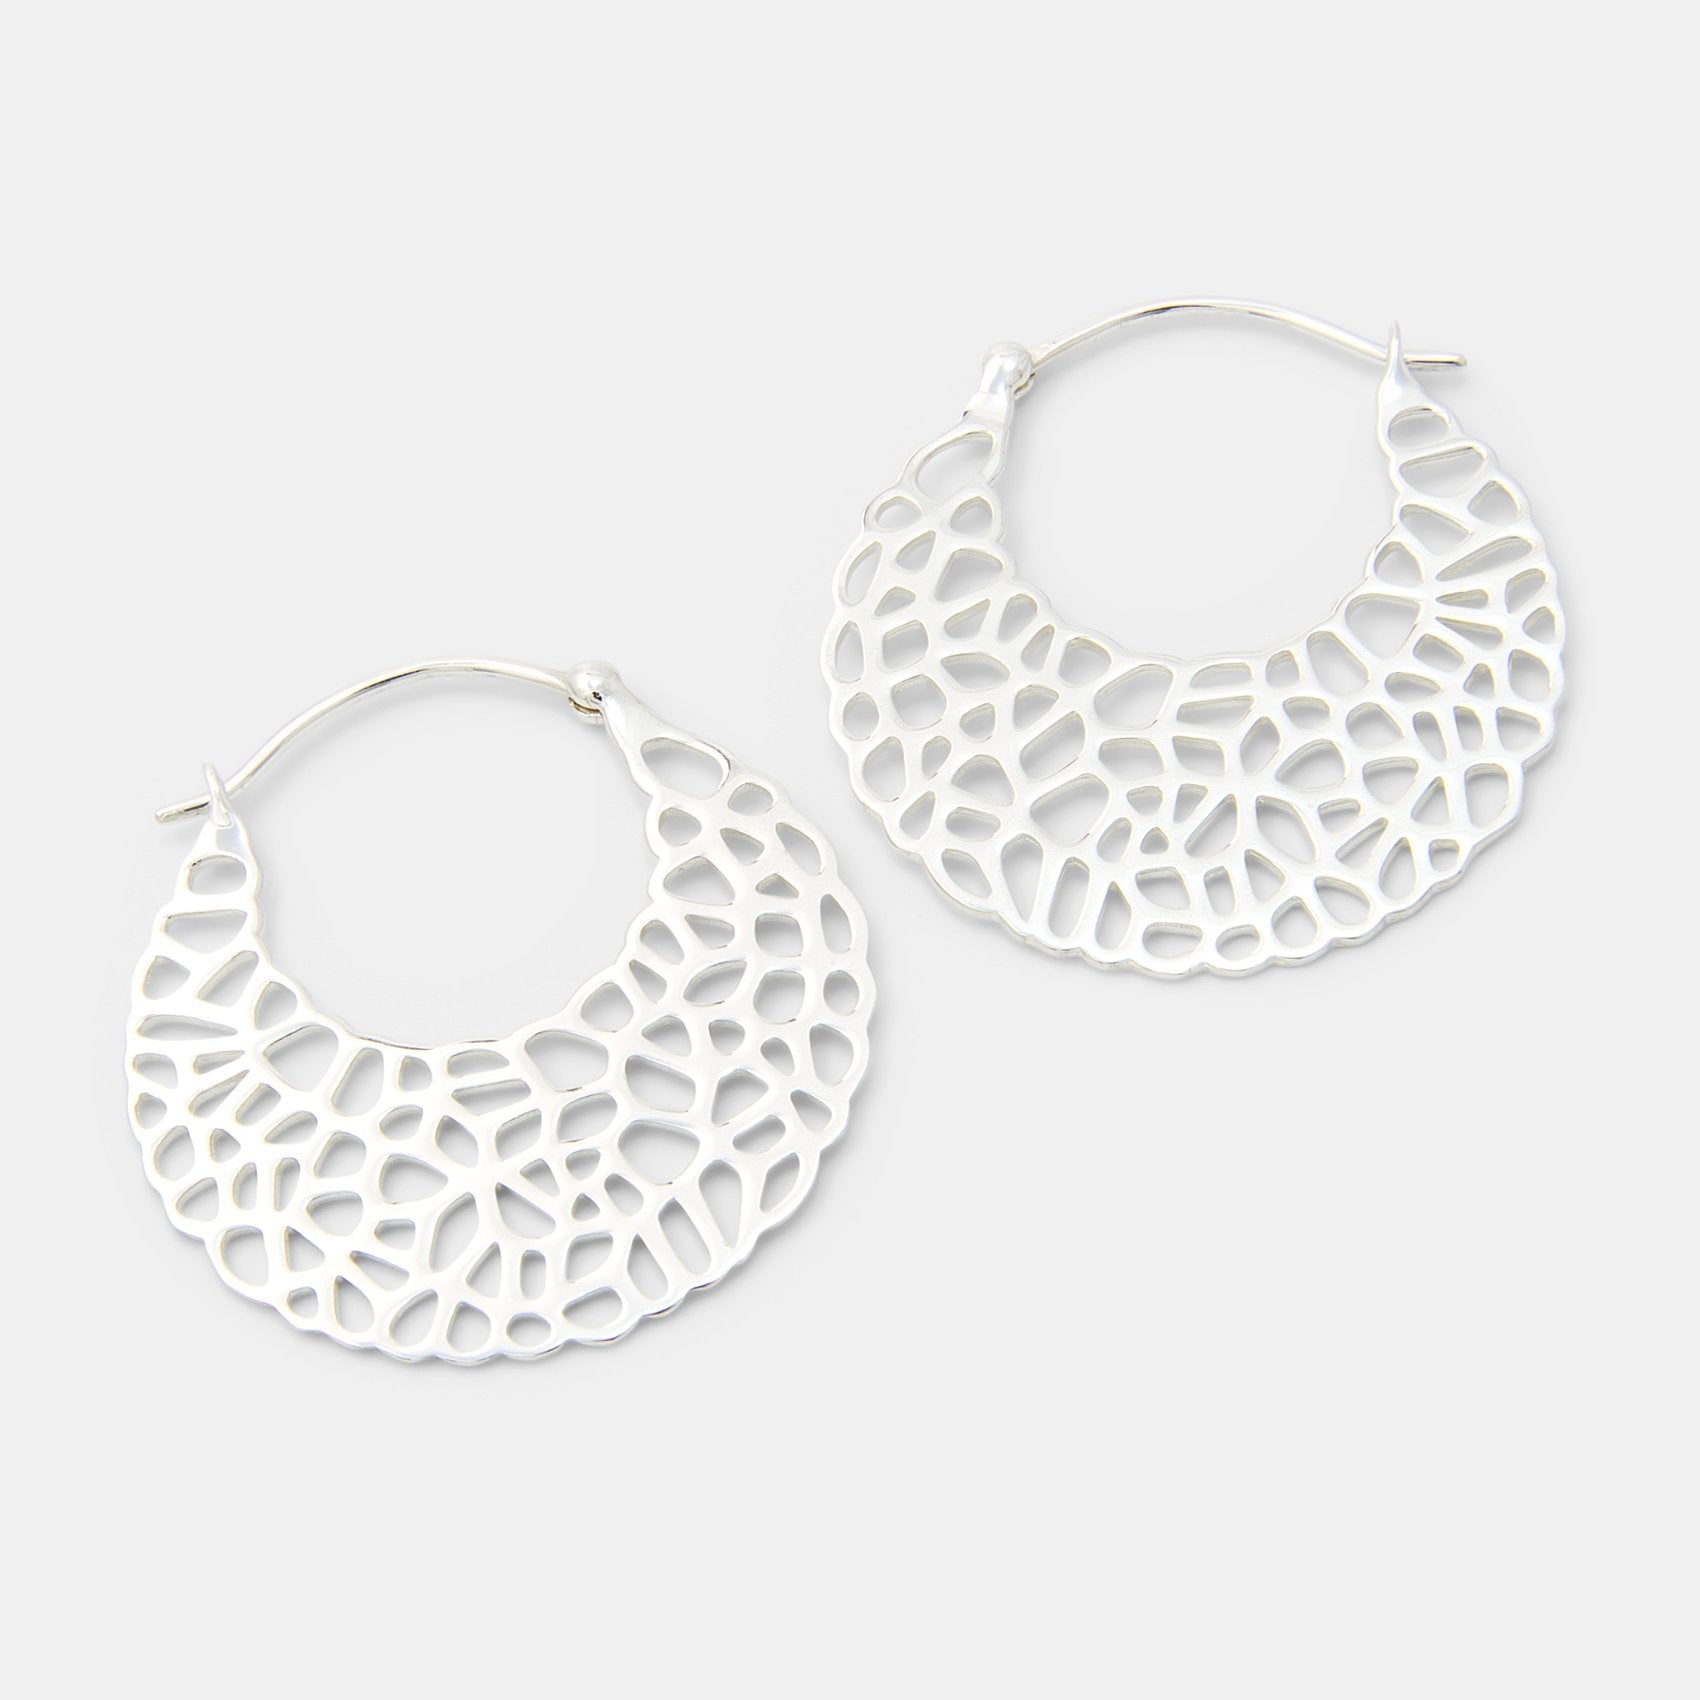 Coral silver hoop earrings - Simone Walsh Jewellery Australia